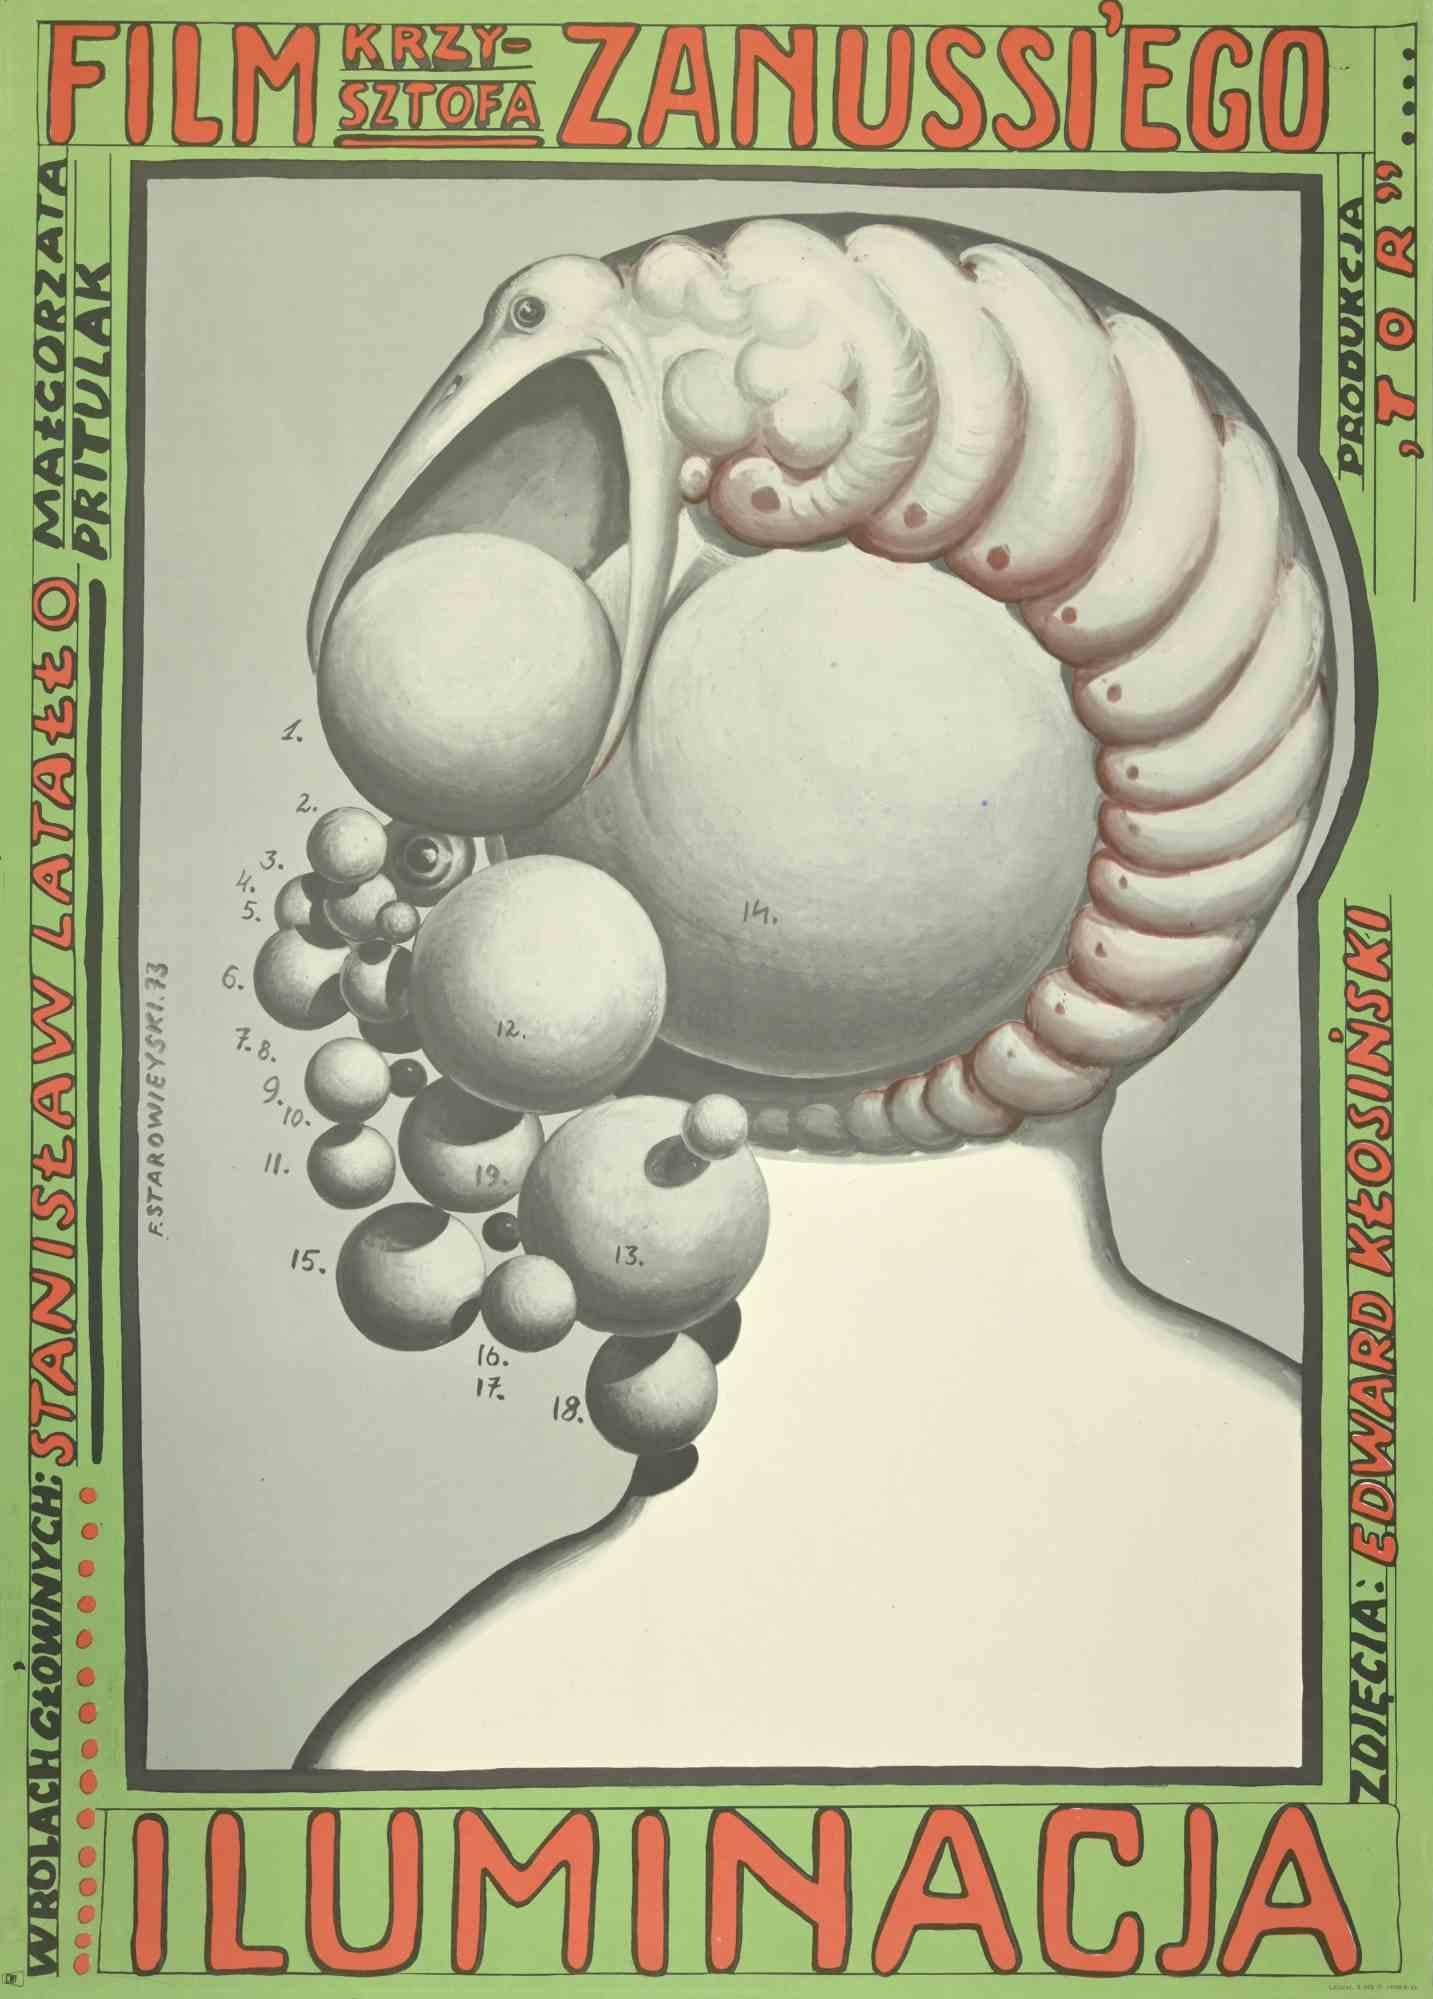 Vintage Poster Iluminacia - Zanussi Ego - Original offset - 1973